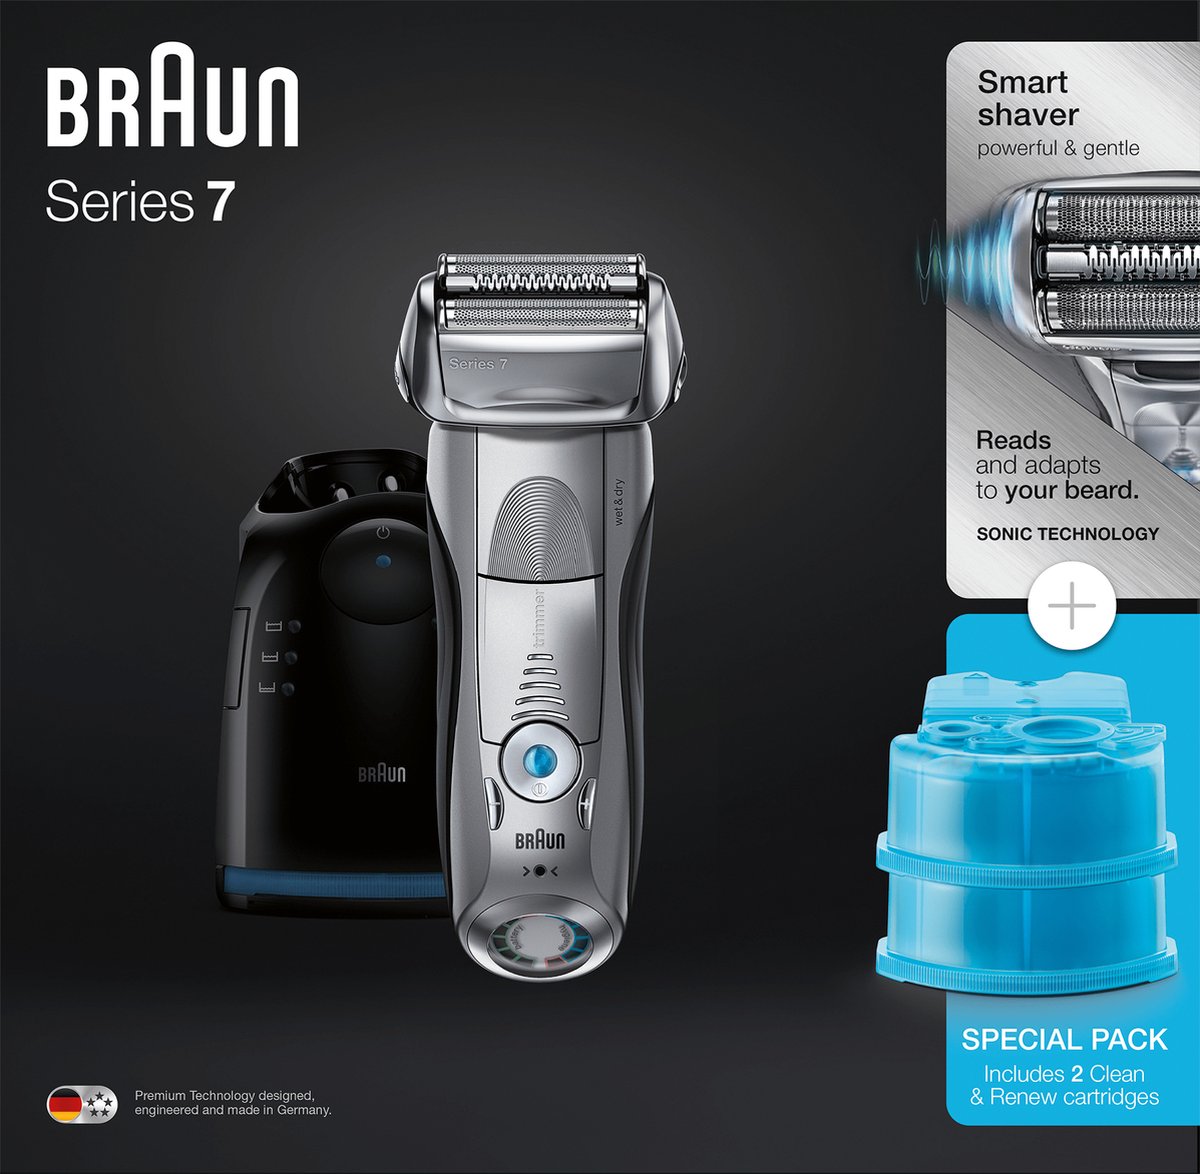 Braun series 7 70-n7200cc tondeuse barbe - autonomie 50min - technologie  autosensing - La Poste